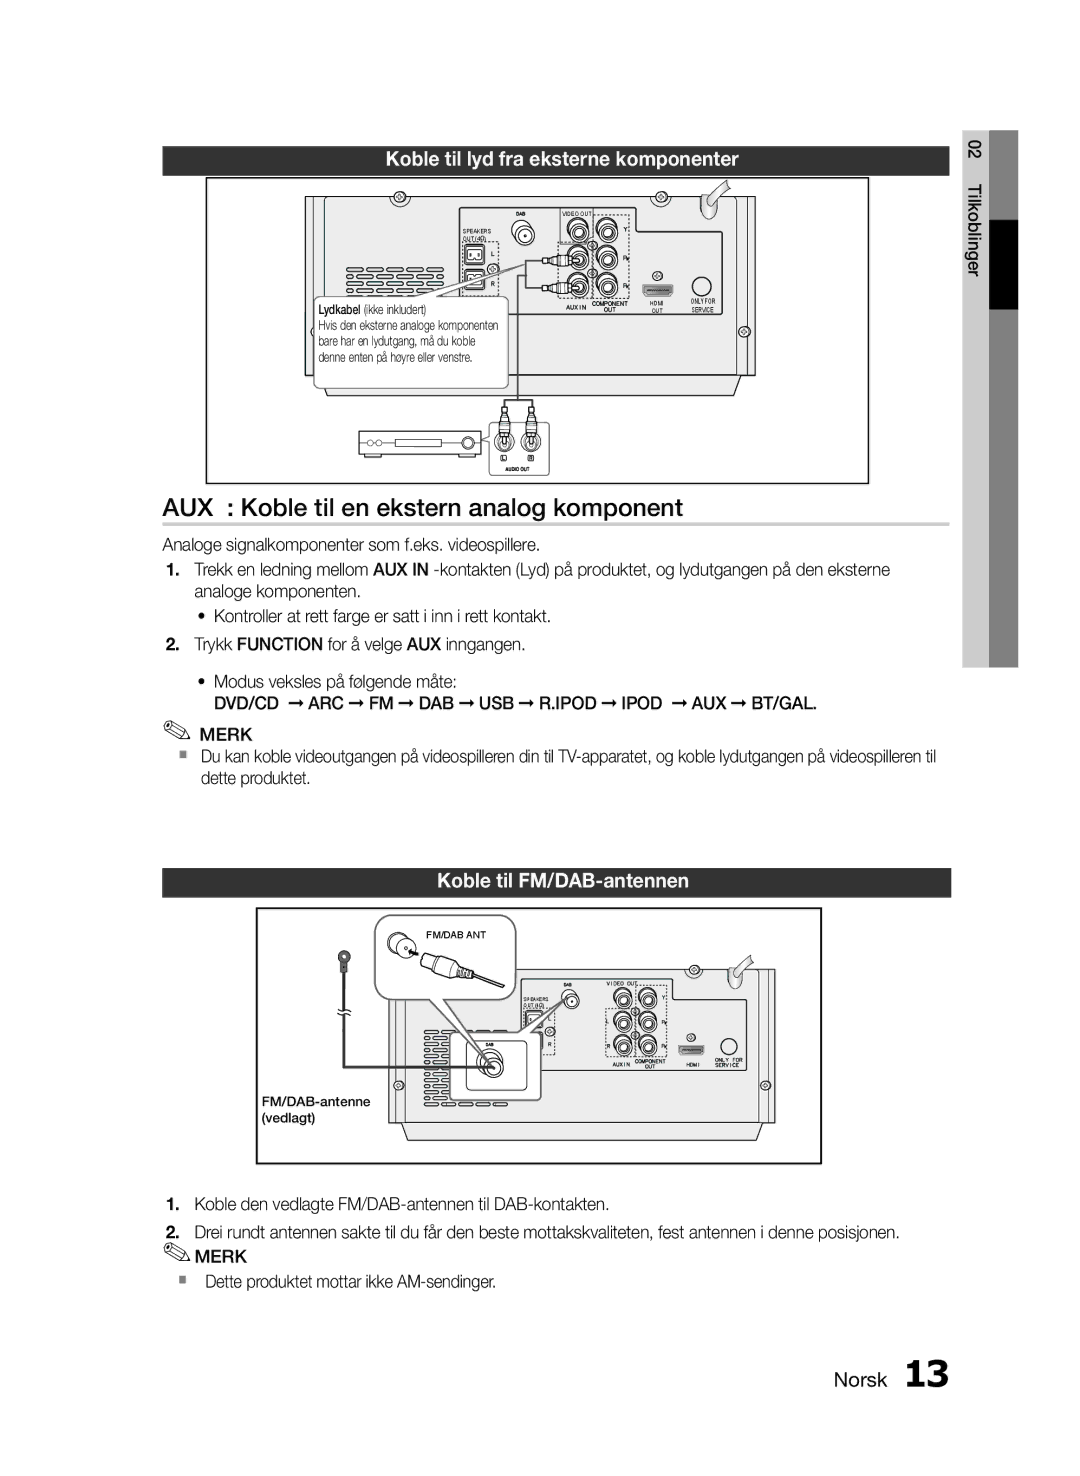 Samsung MM-E460D/XE manual AUX Koble til en ekstern analog komponent, Koble til lyd fra eksterne komponenter 